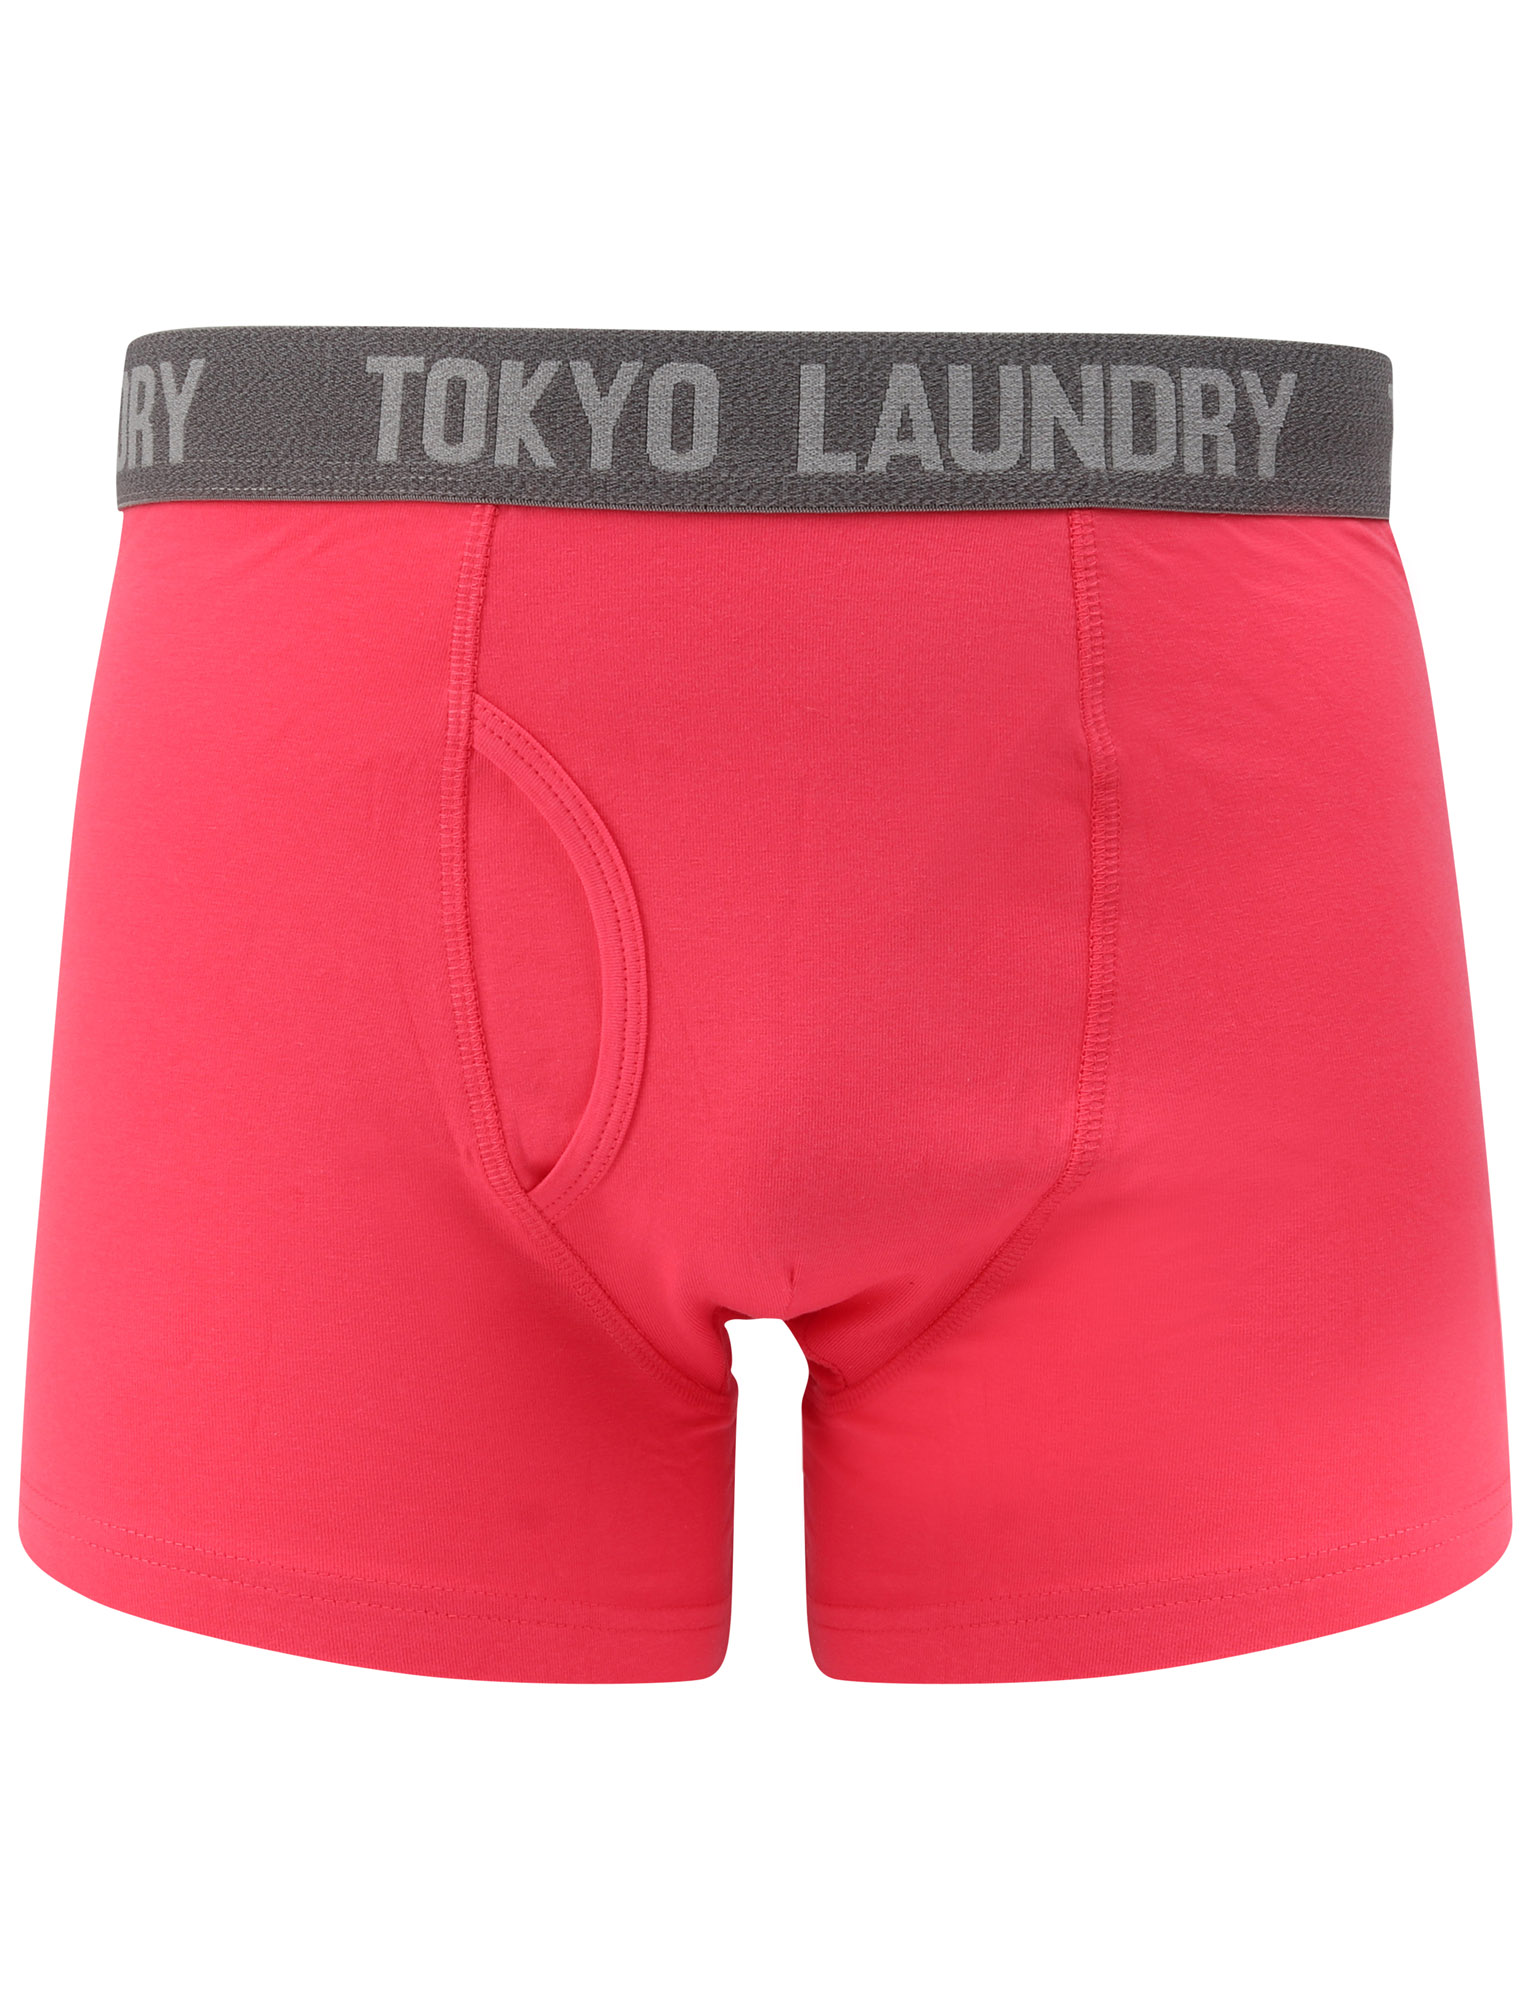 New Mens Tokyo Laundry (2 Pack) Cotton Rich Boxer Shorts Set Trunks ...